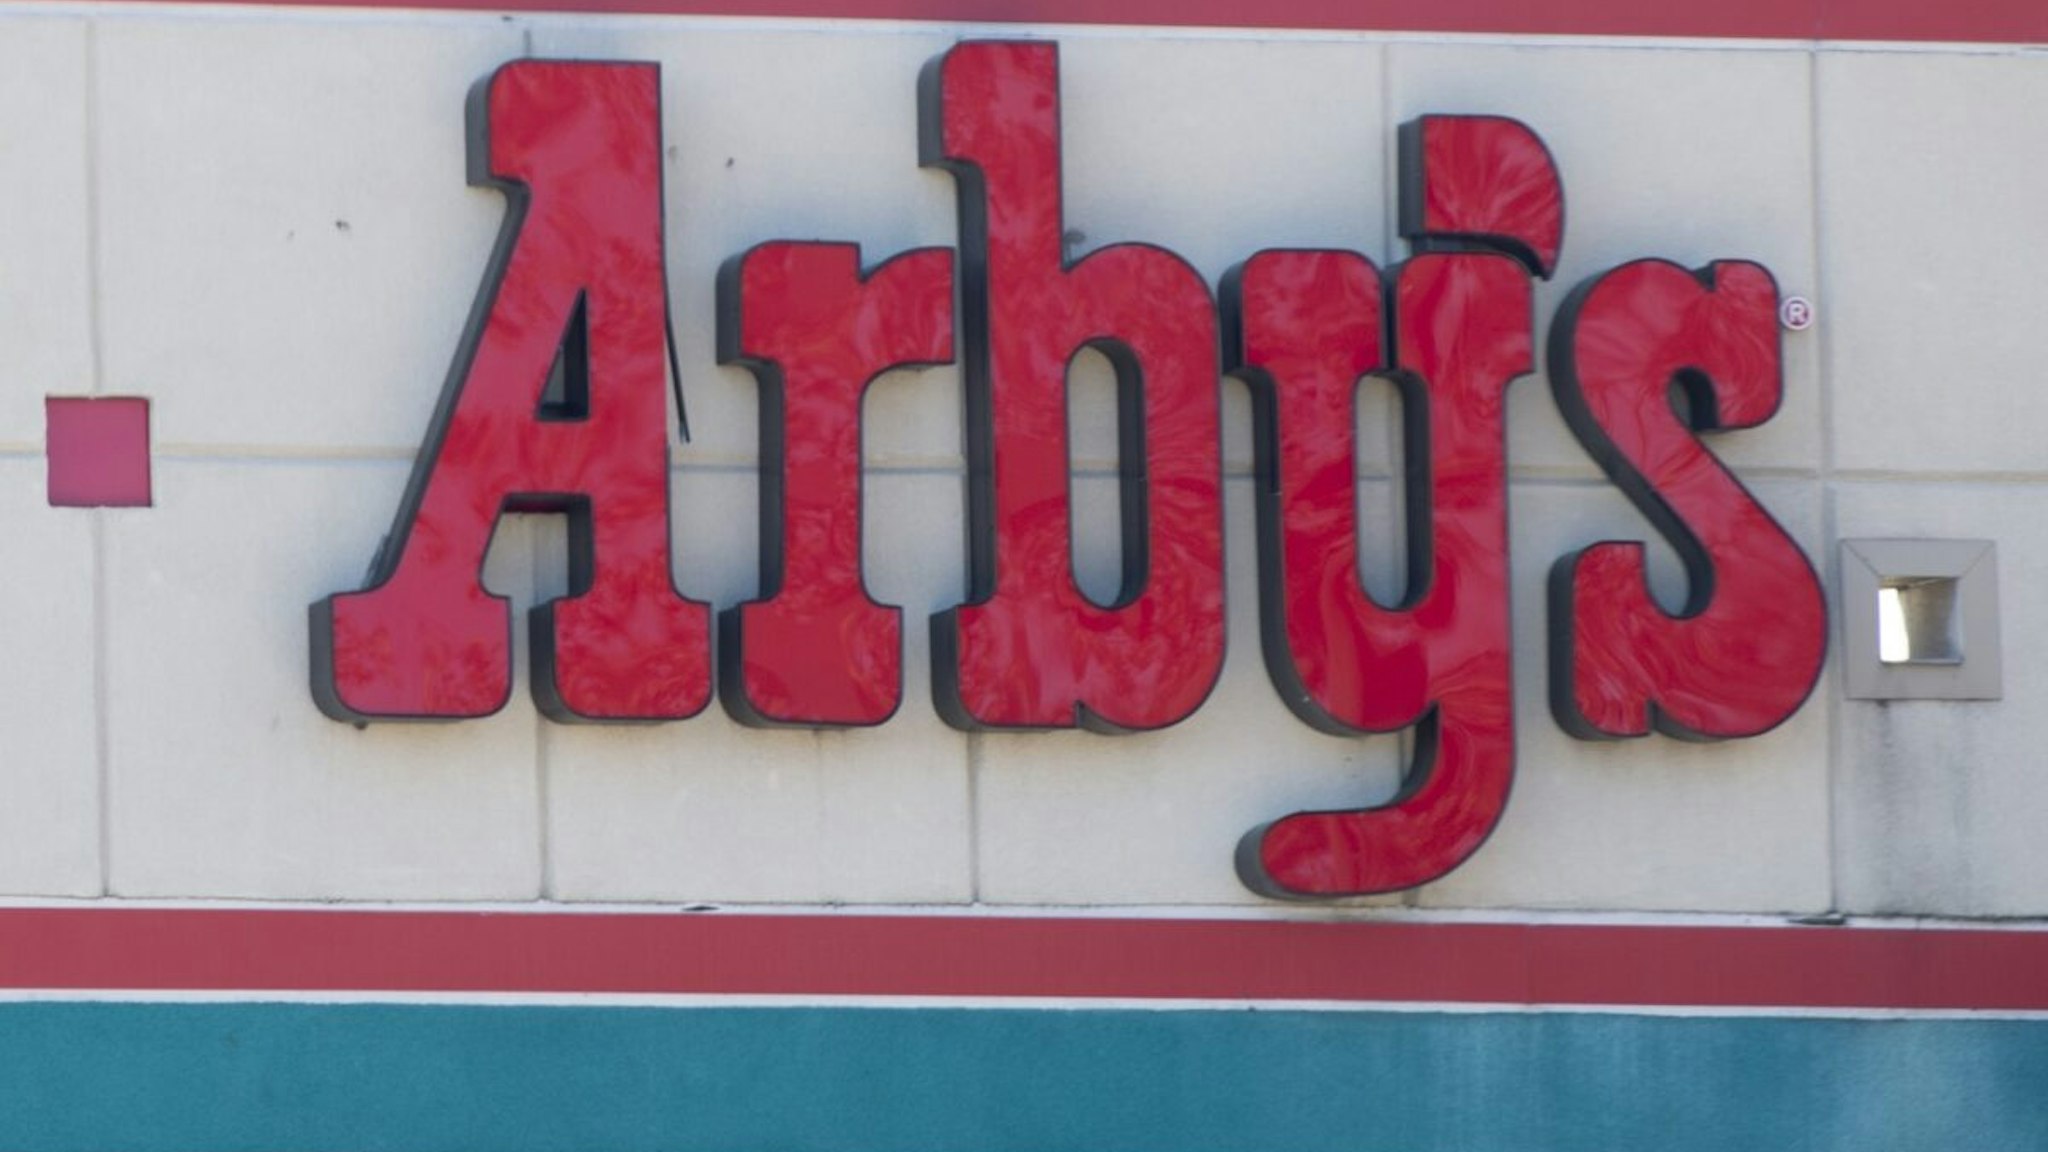 An Arby's fast food restaurant location in Woodbridge, Virginia, January 5, 2016